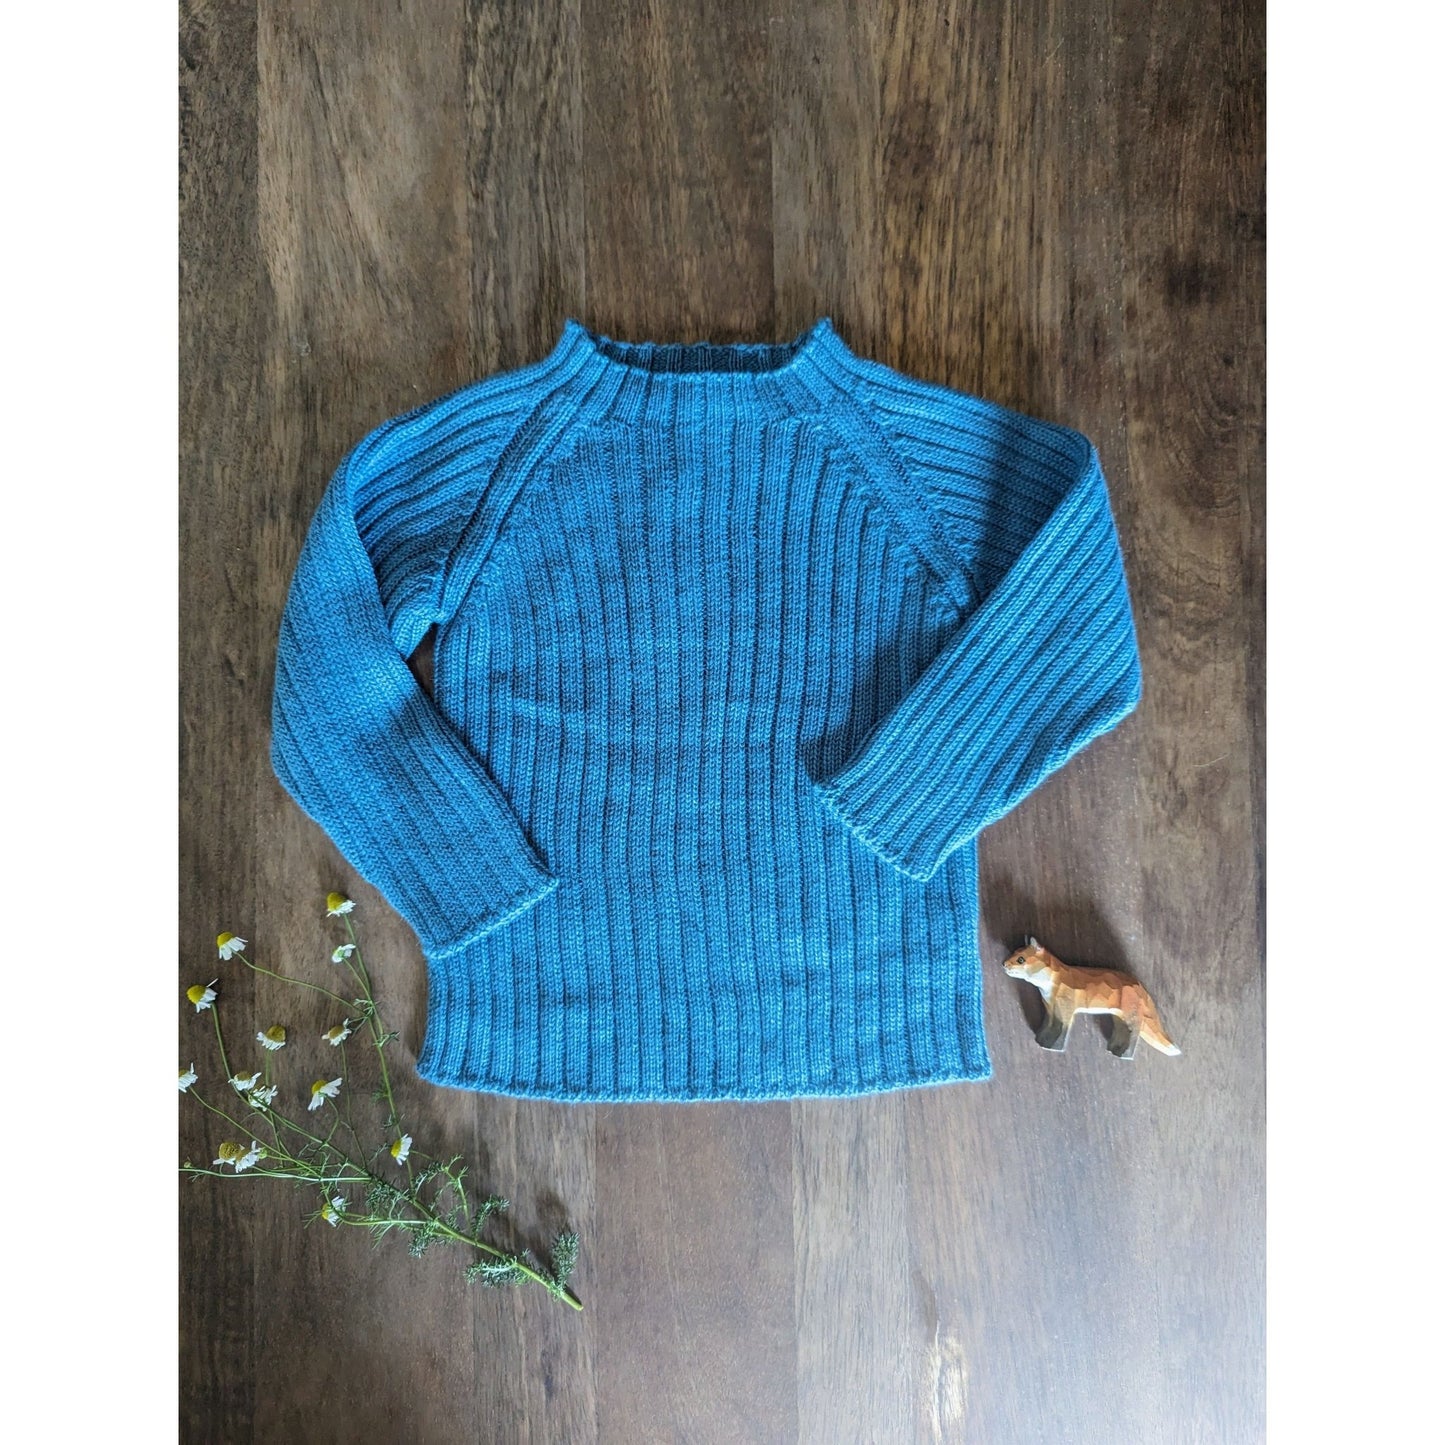 My Alpaca Copenhagen - Alpaca Baby and Kids Sweater (3 colors) - Nature's Wild Child